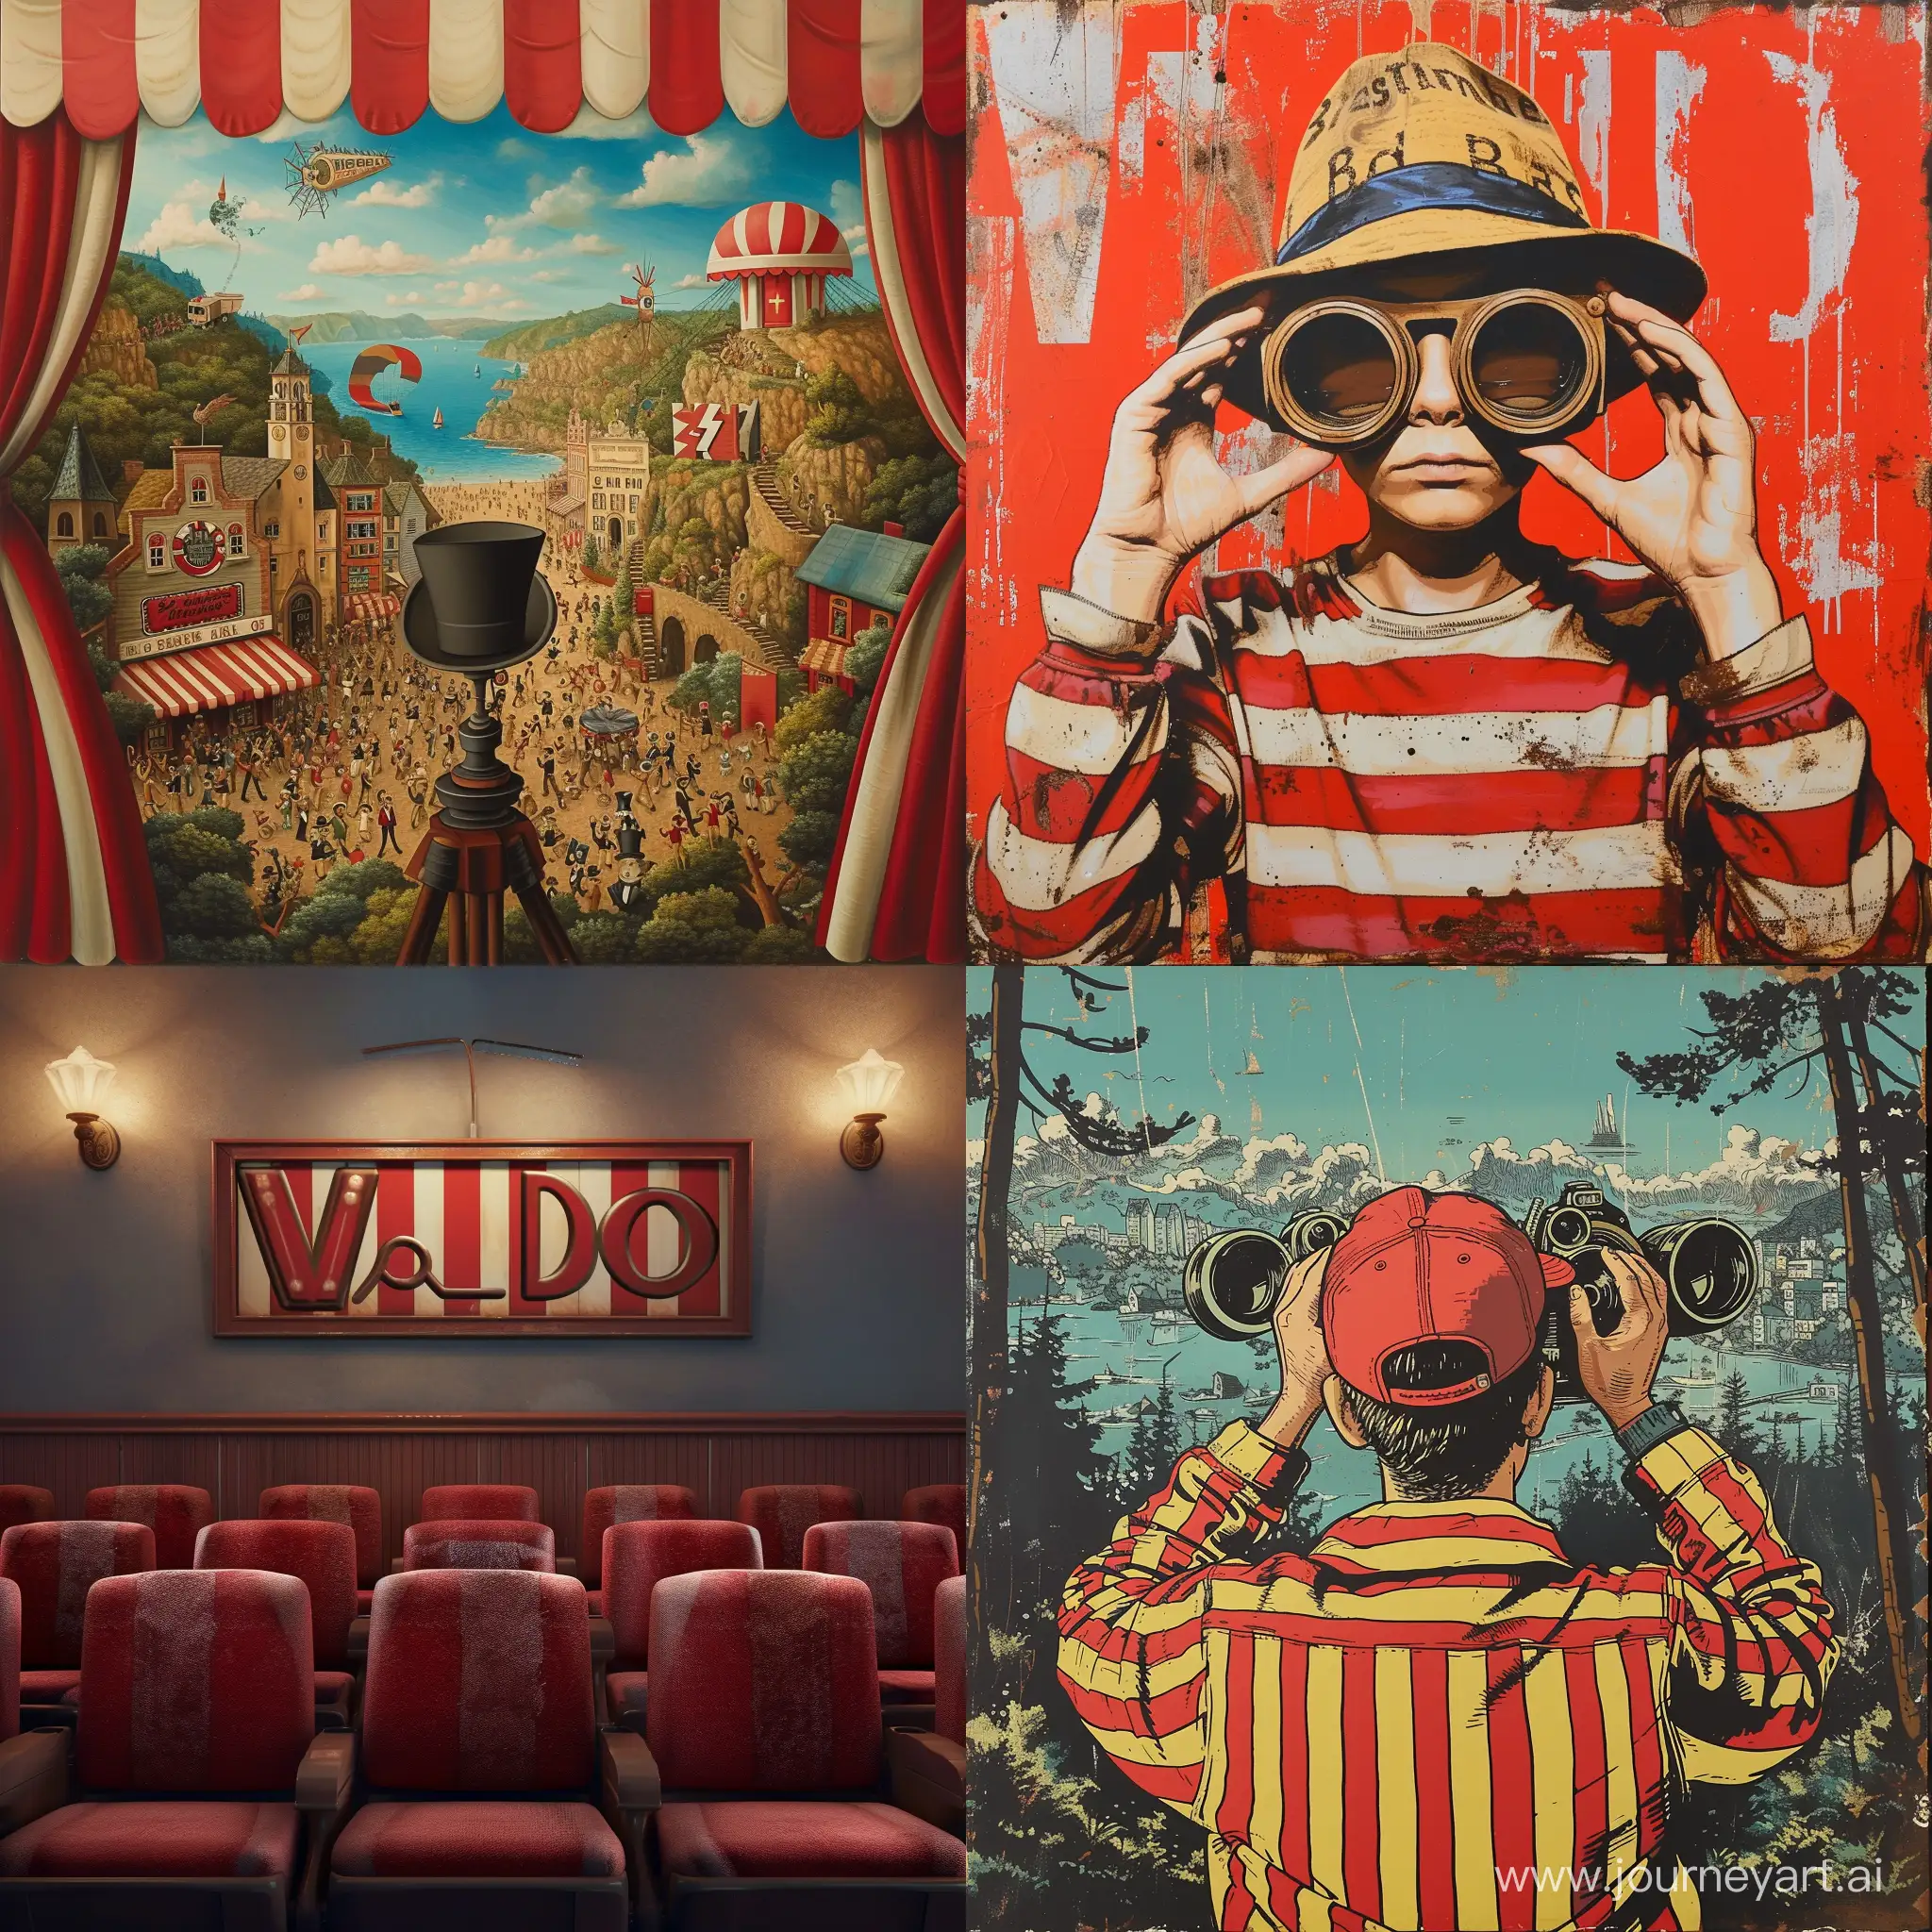 Waldo in cinema in style search waldo 